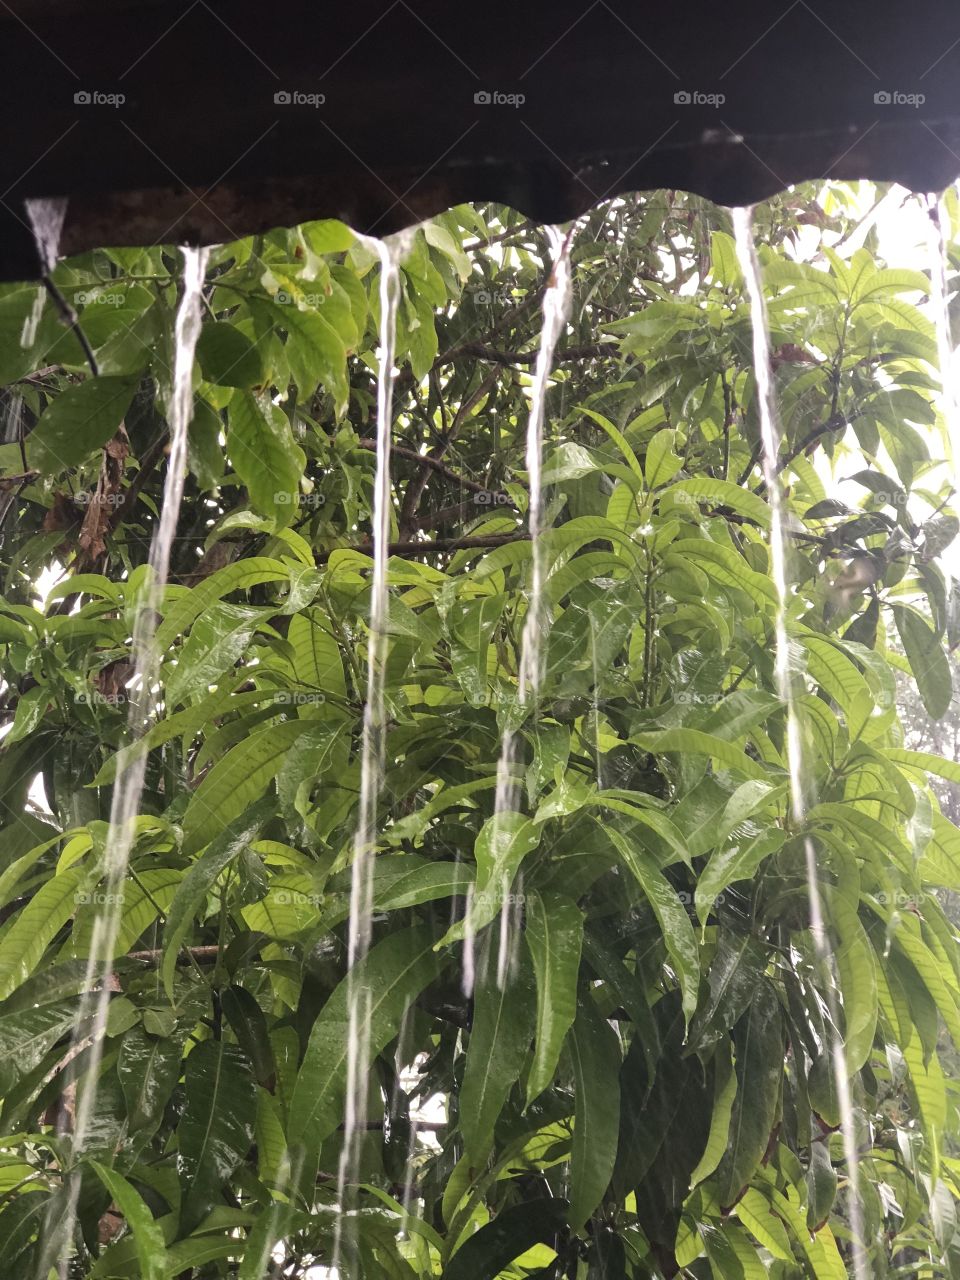 Rain 